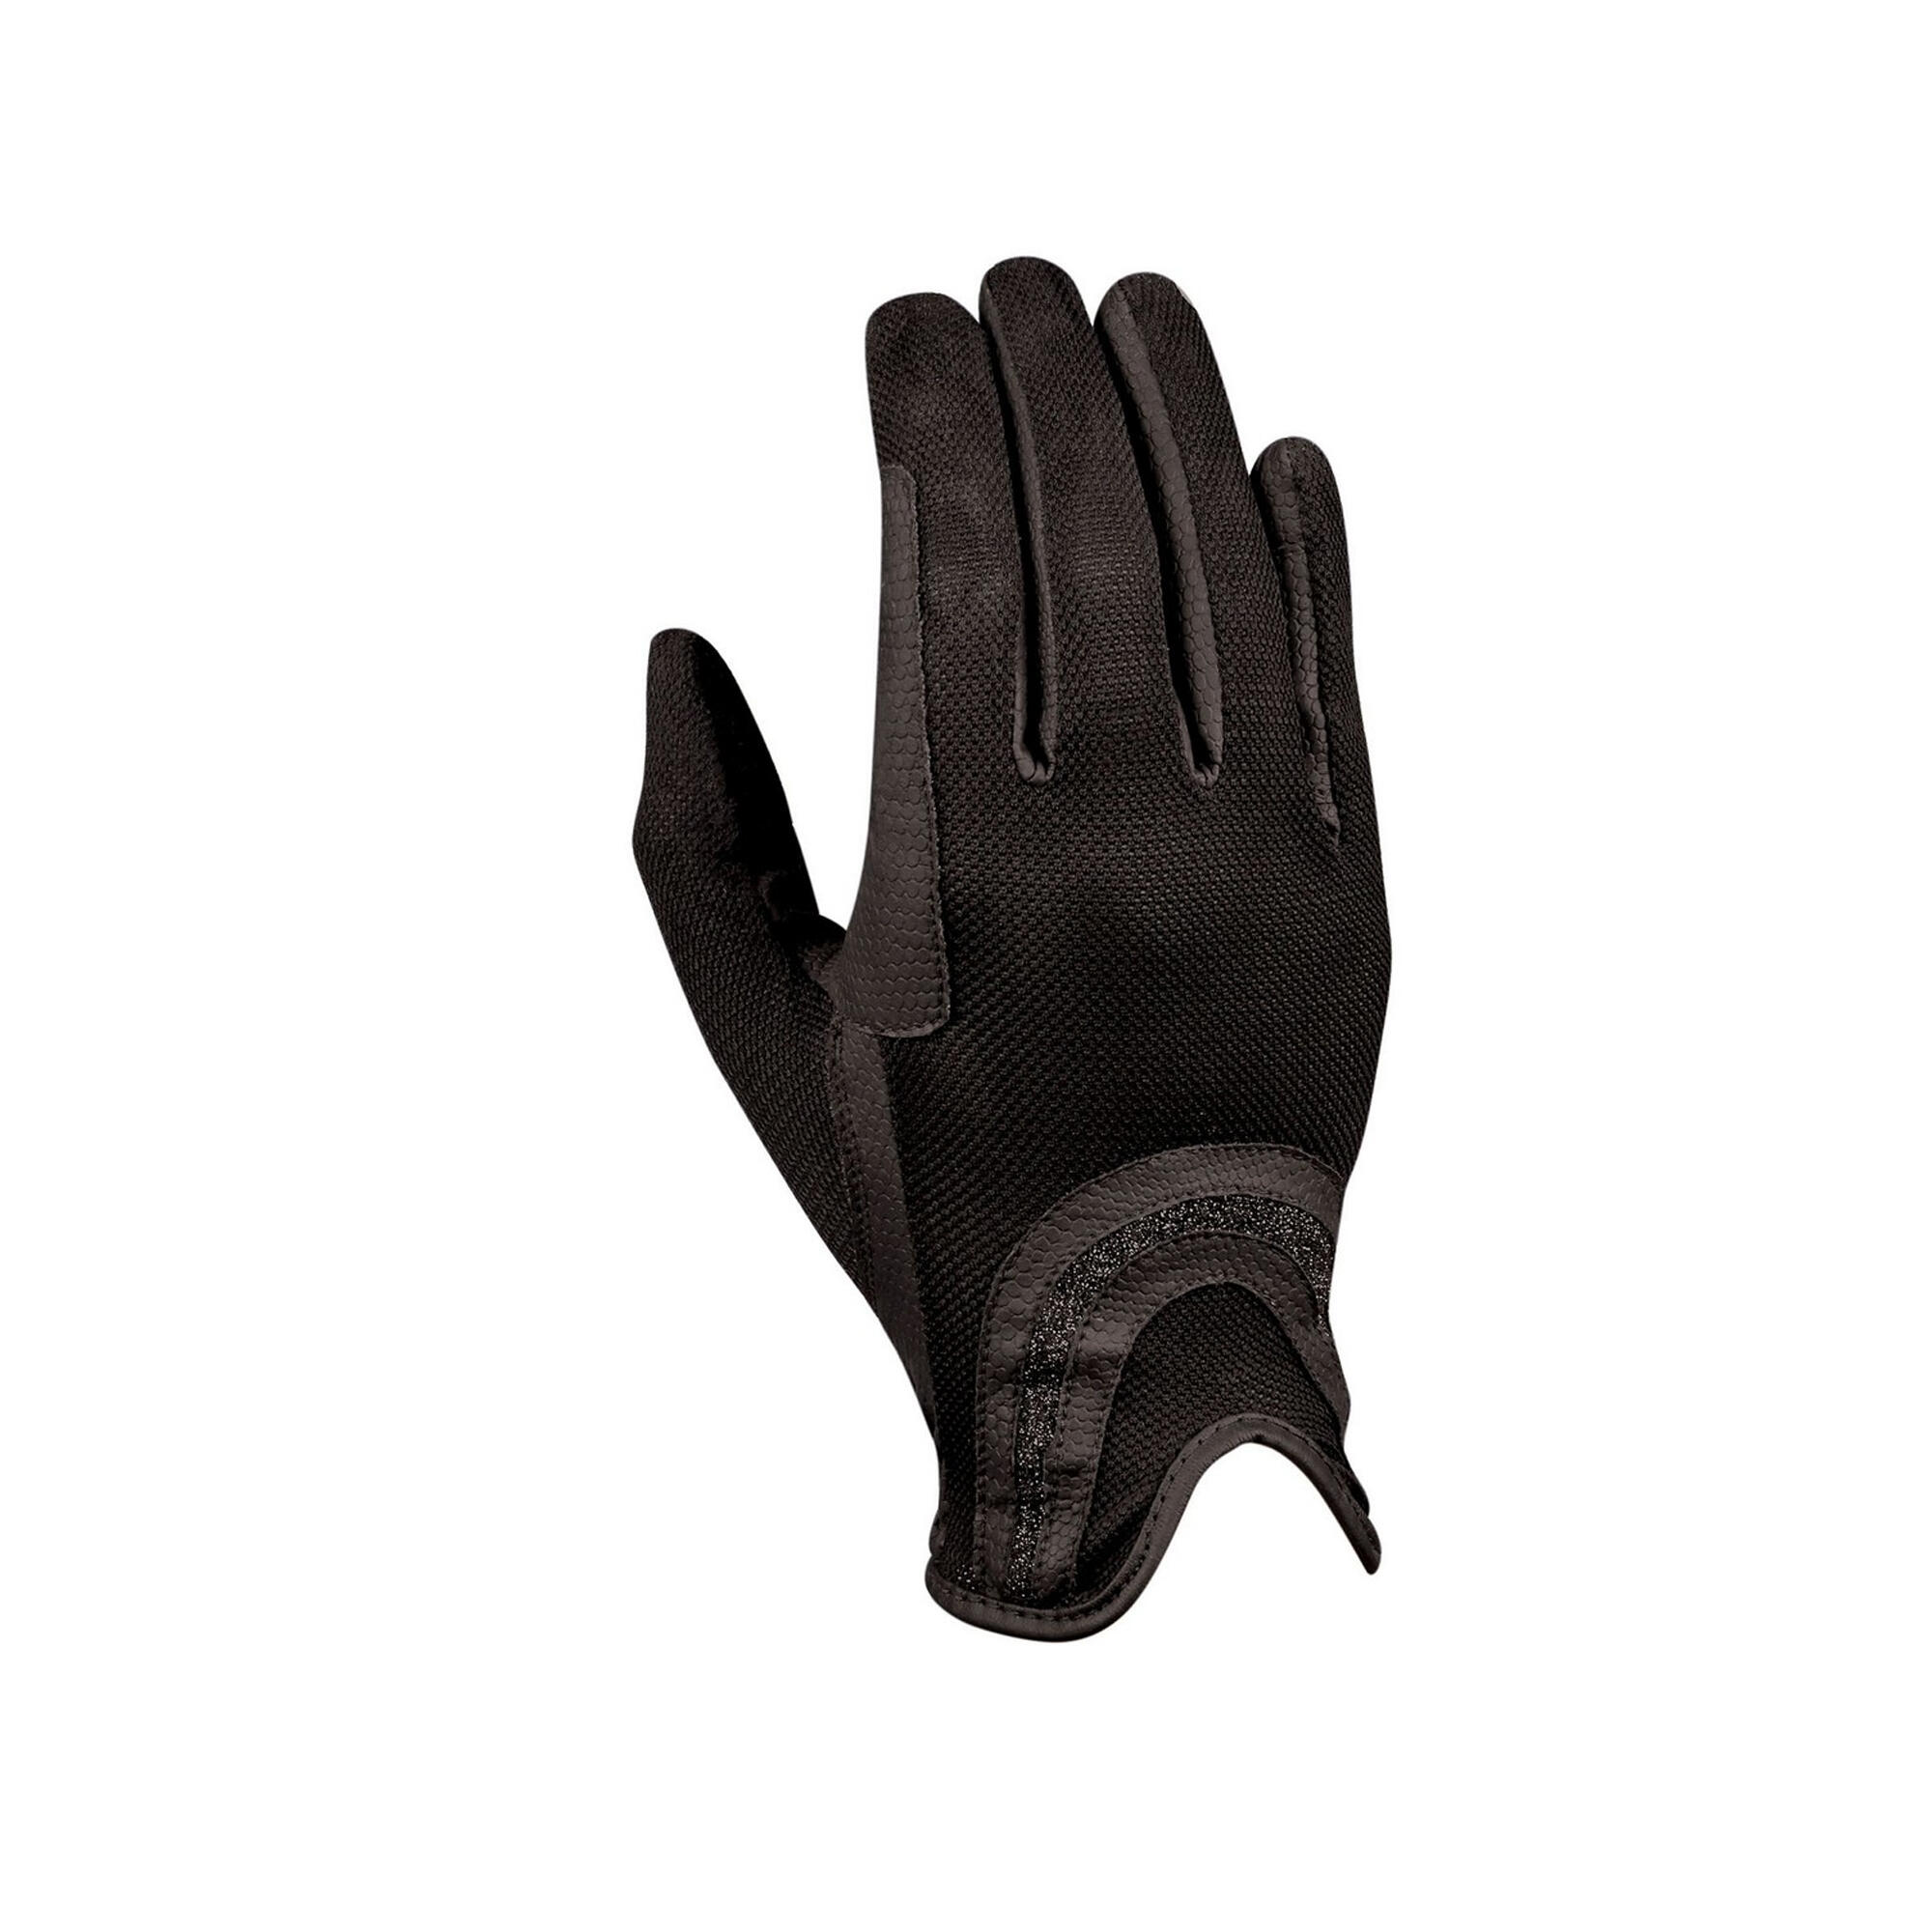 Mesh Palm Goat Leather Glitter Riding Gloves (Black) 2/3